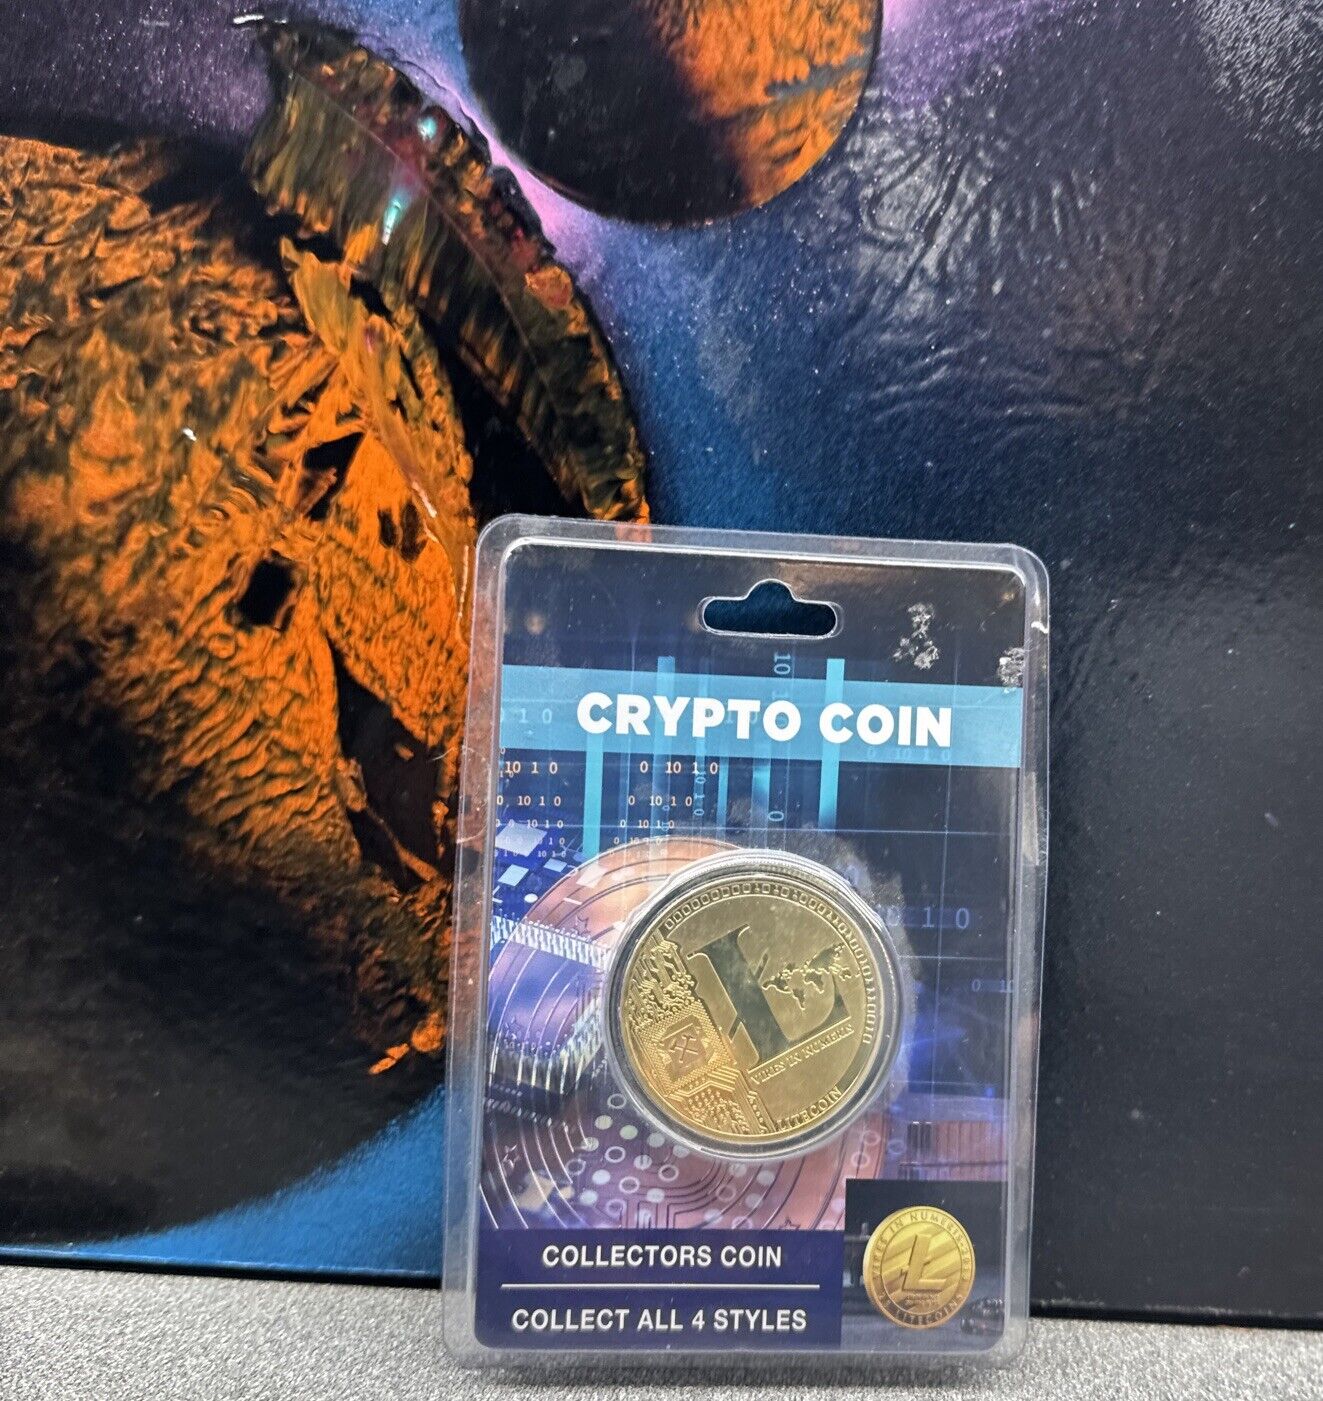 “NEW” [2013 Crypto Coin] [Litecoin] [25] Collectors Edition Gold 